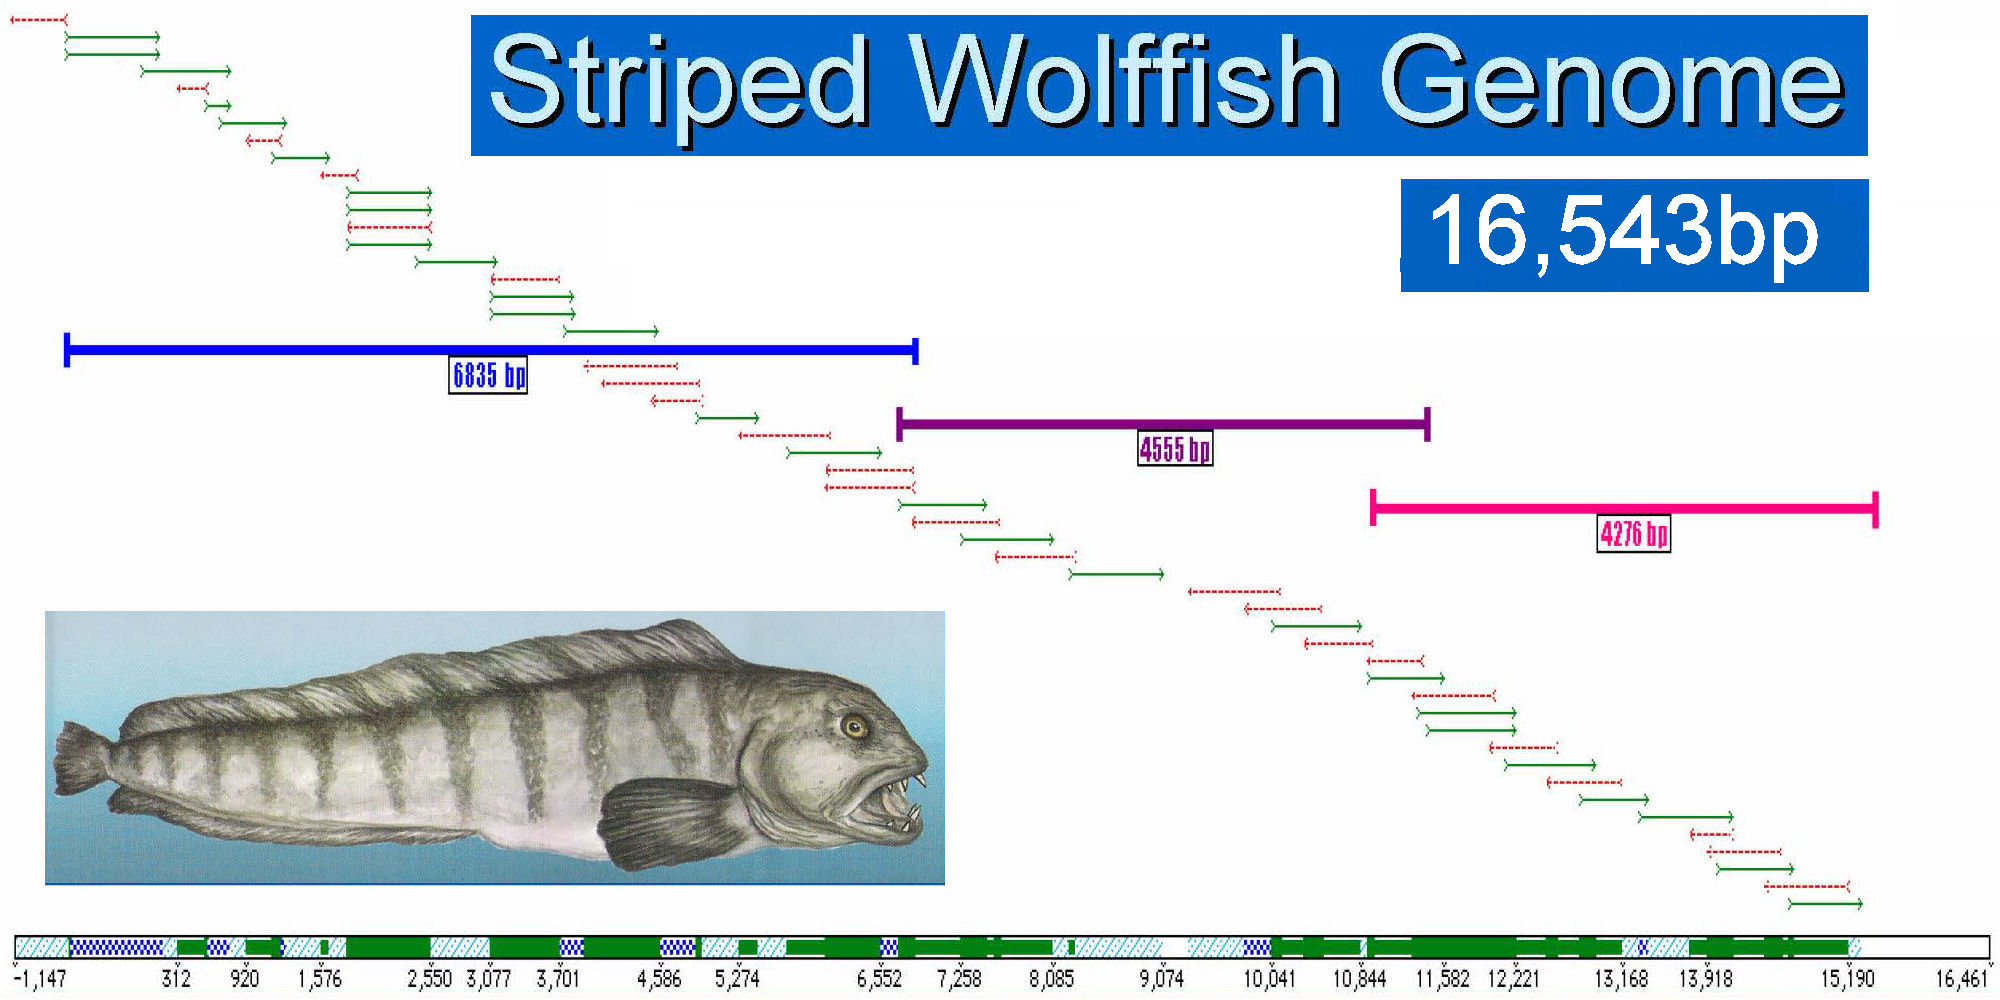 Striped Wolffish genome